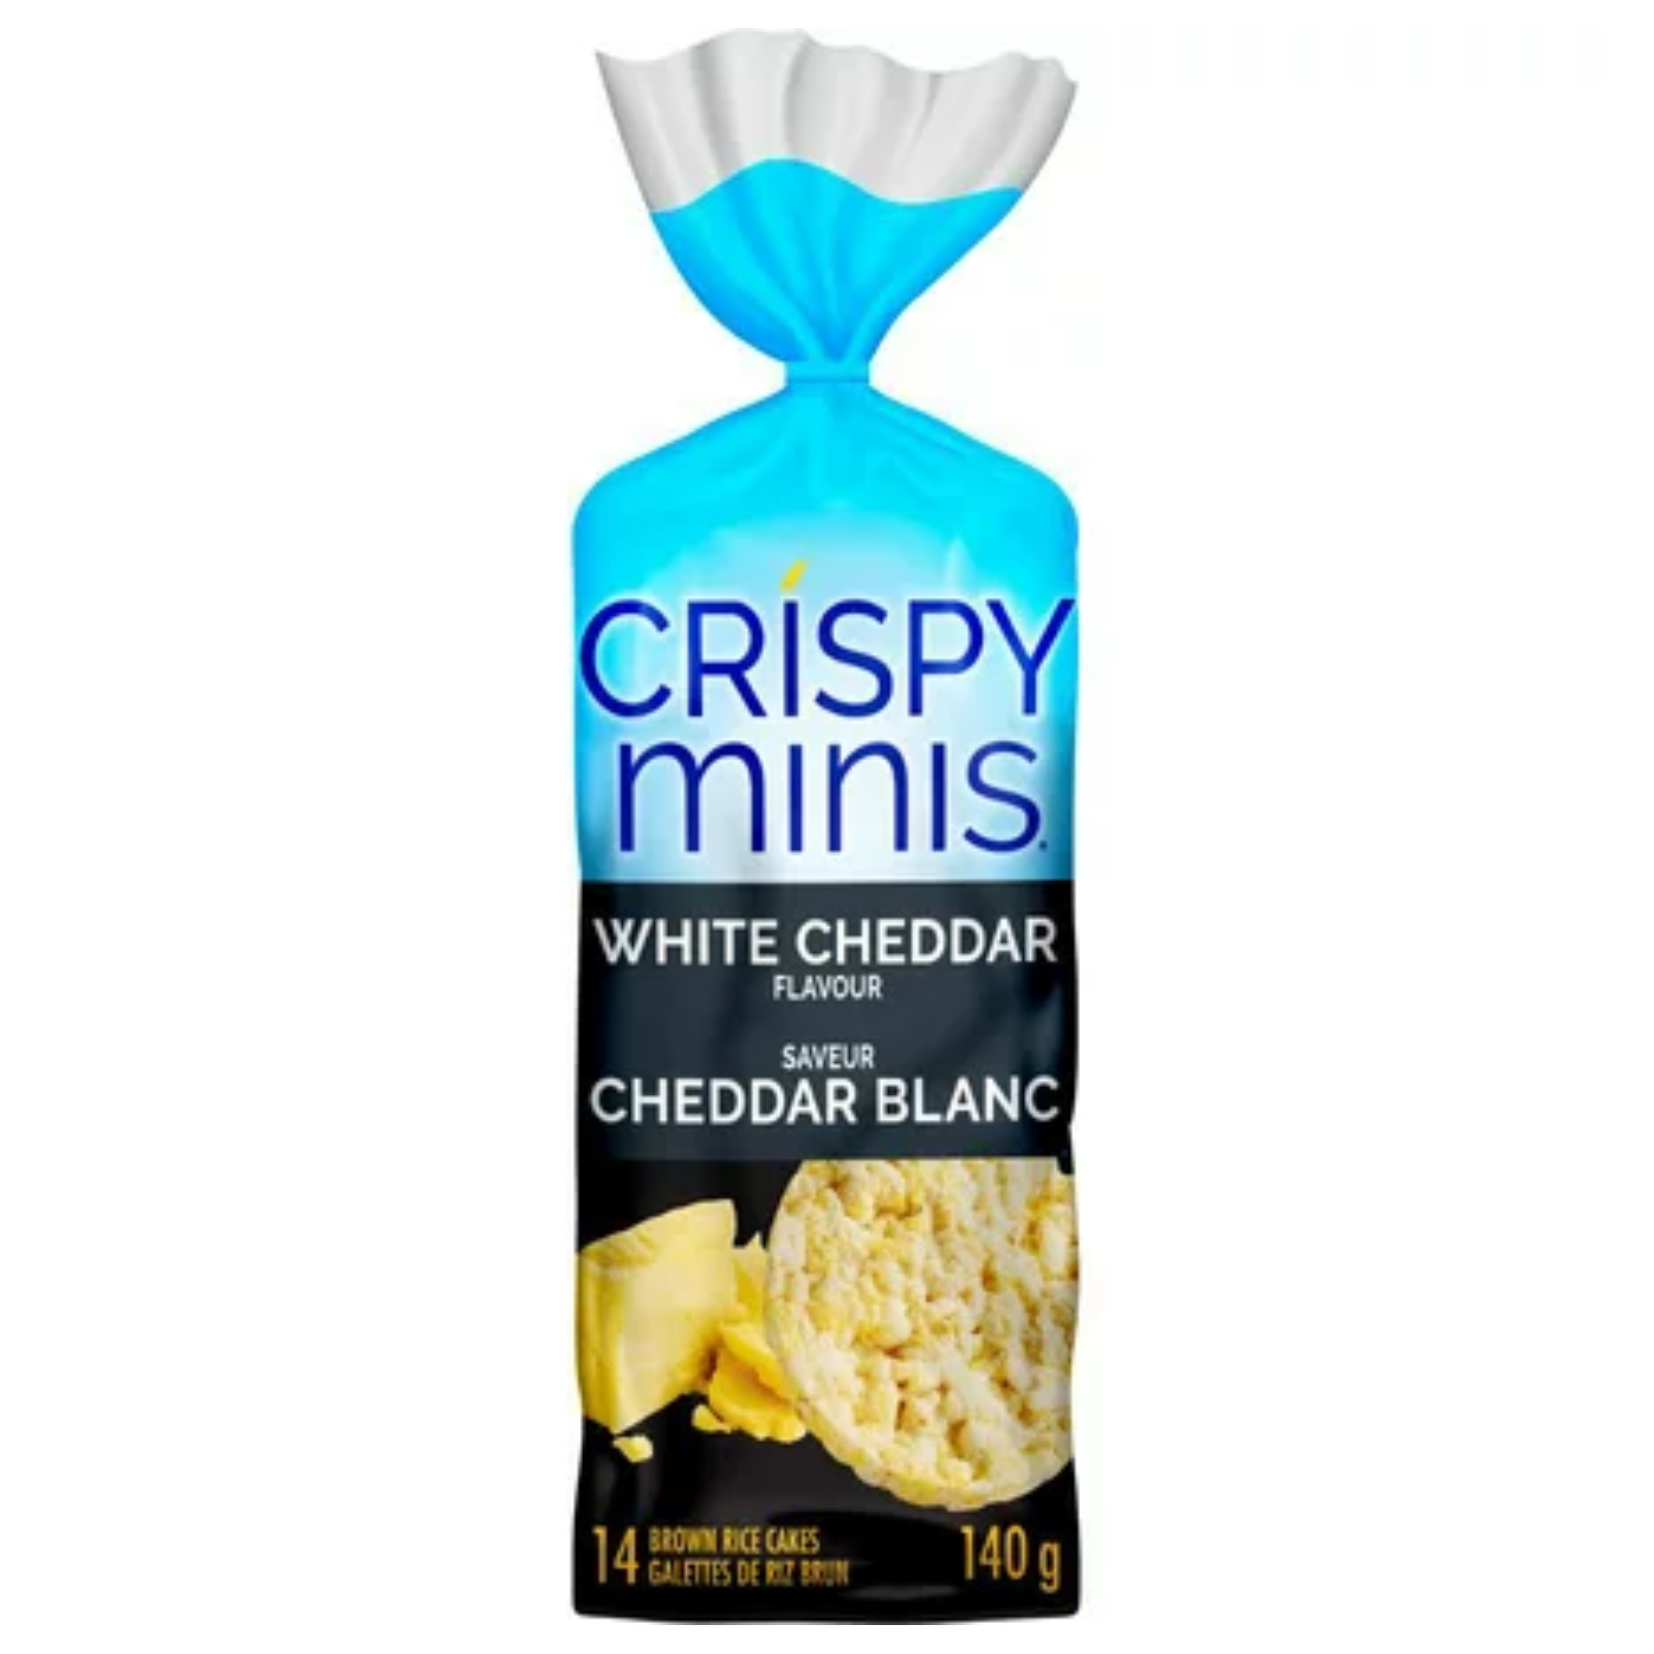 Quaker Crispy Minis White Cheddar Flavour Brown Rice Cakes 140g